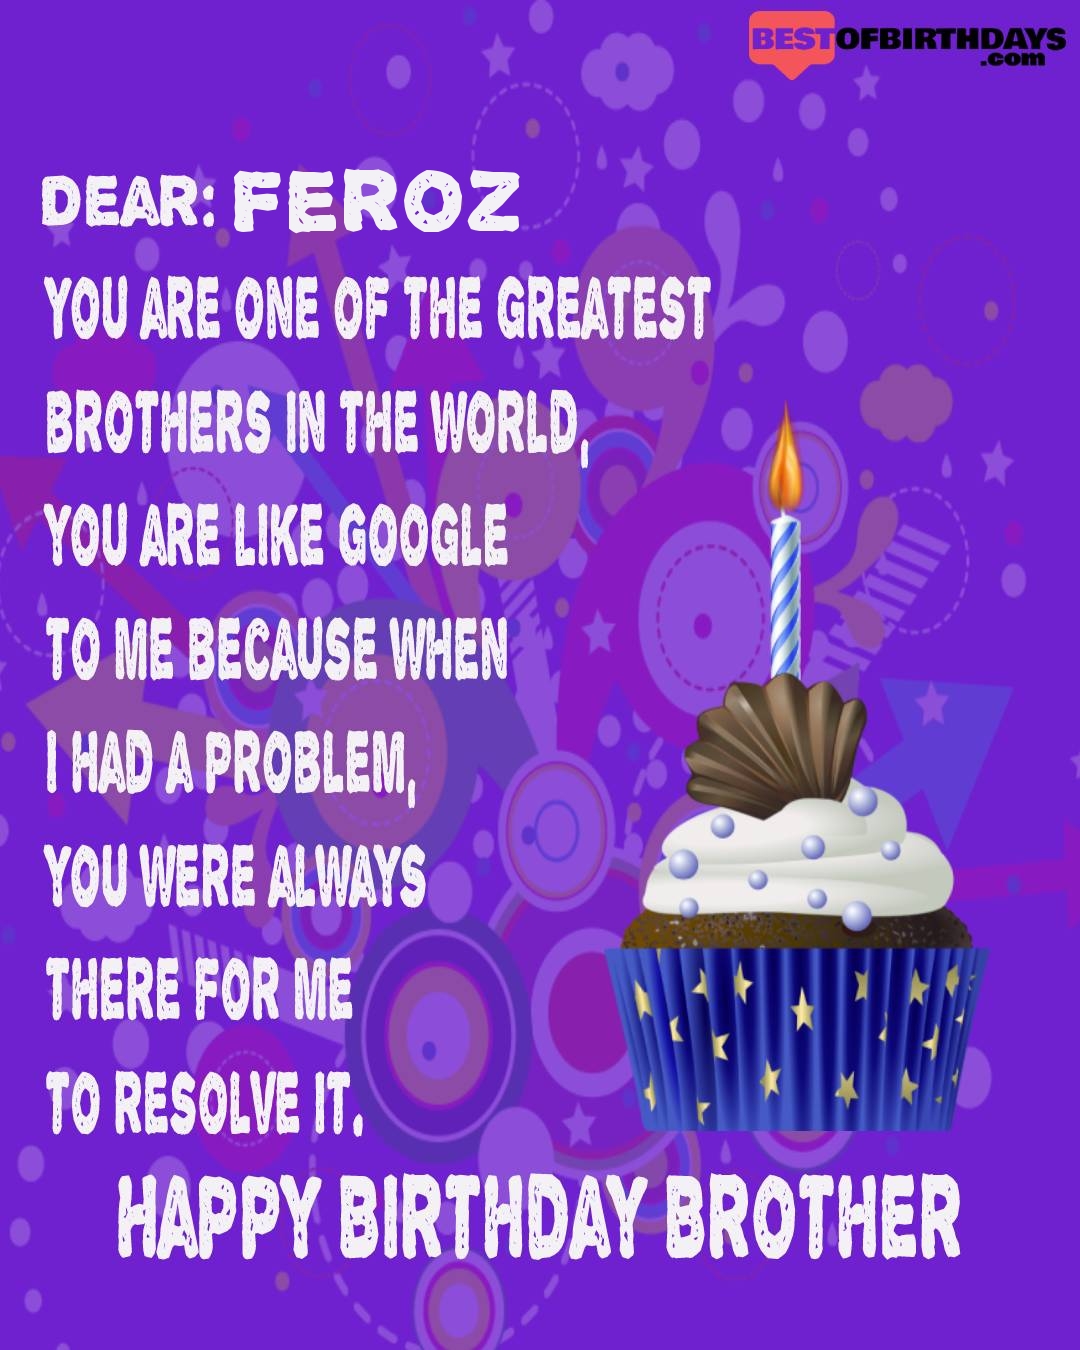 Happy birthday feroz bhai brother bro